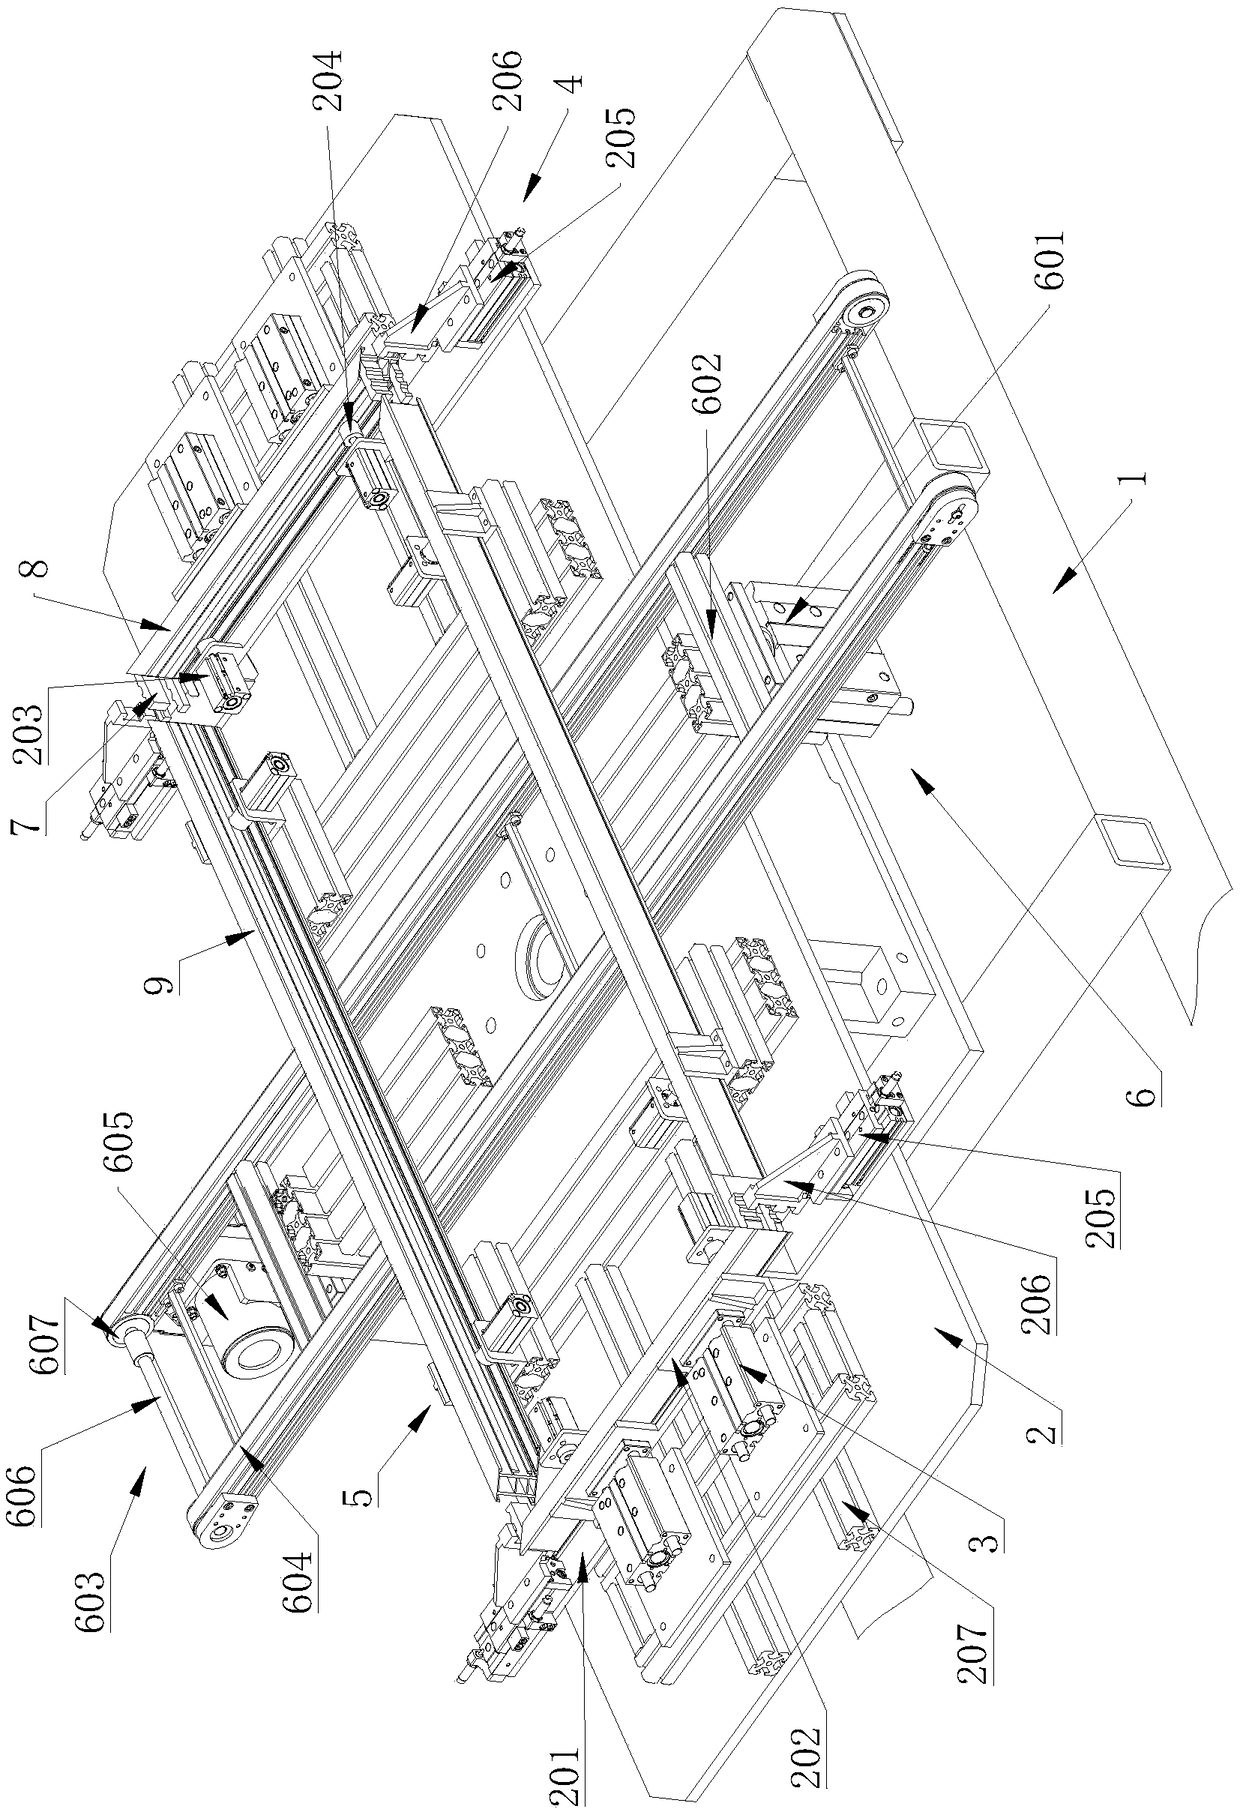 Assembling device for rectangular frame and assembling method of assembling device